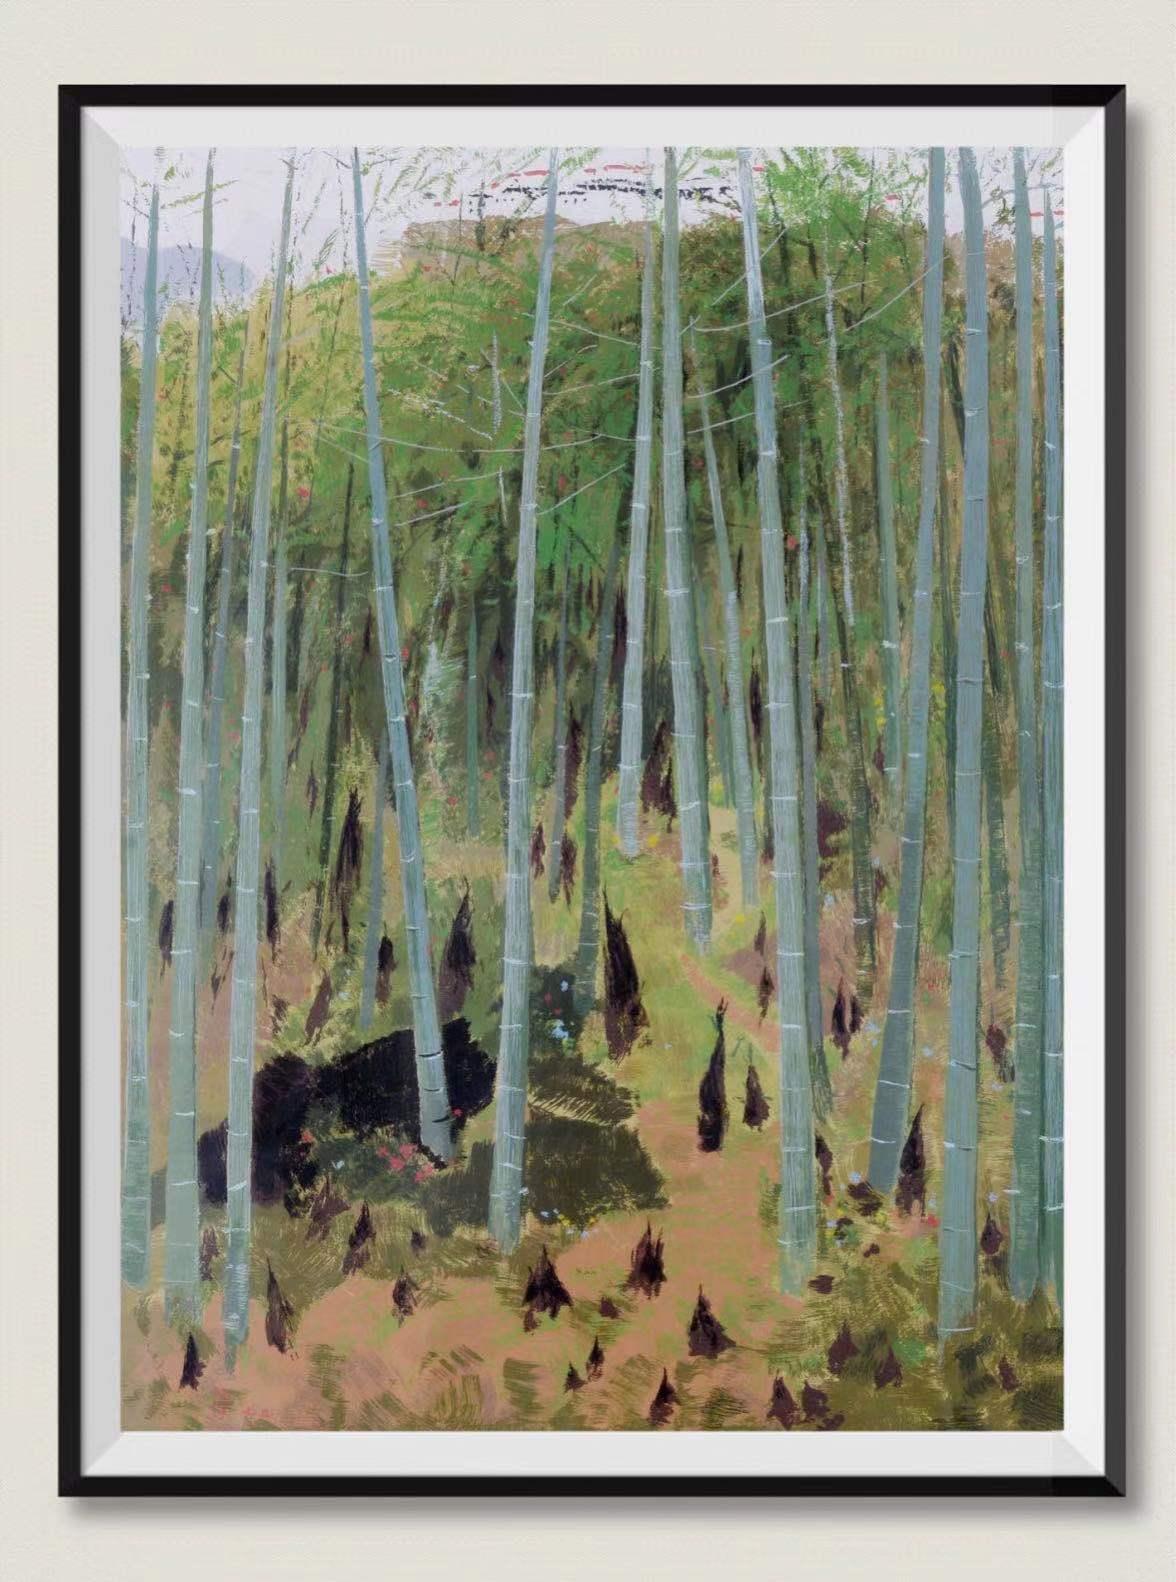 Bamboo Grove - Contemporary Print by Wu Guanzhong